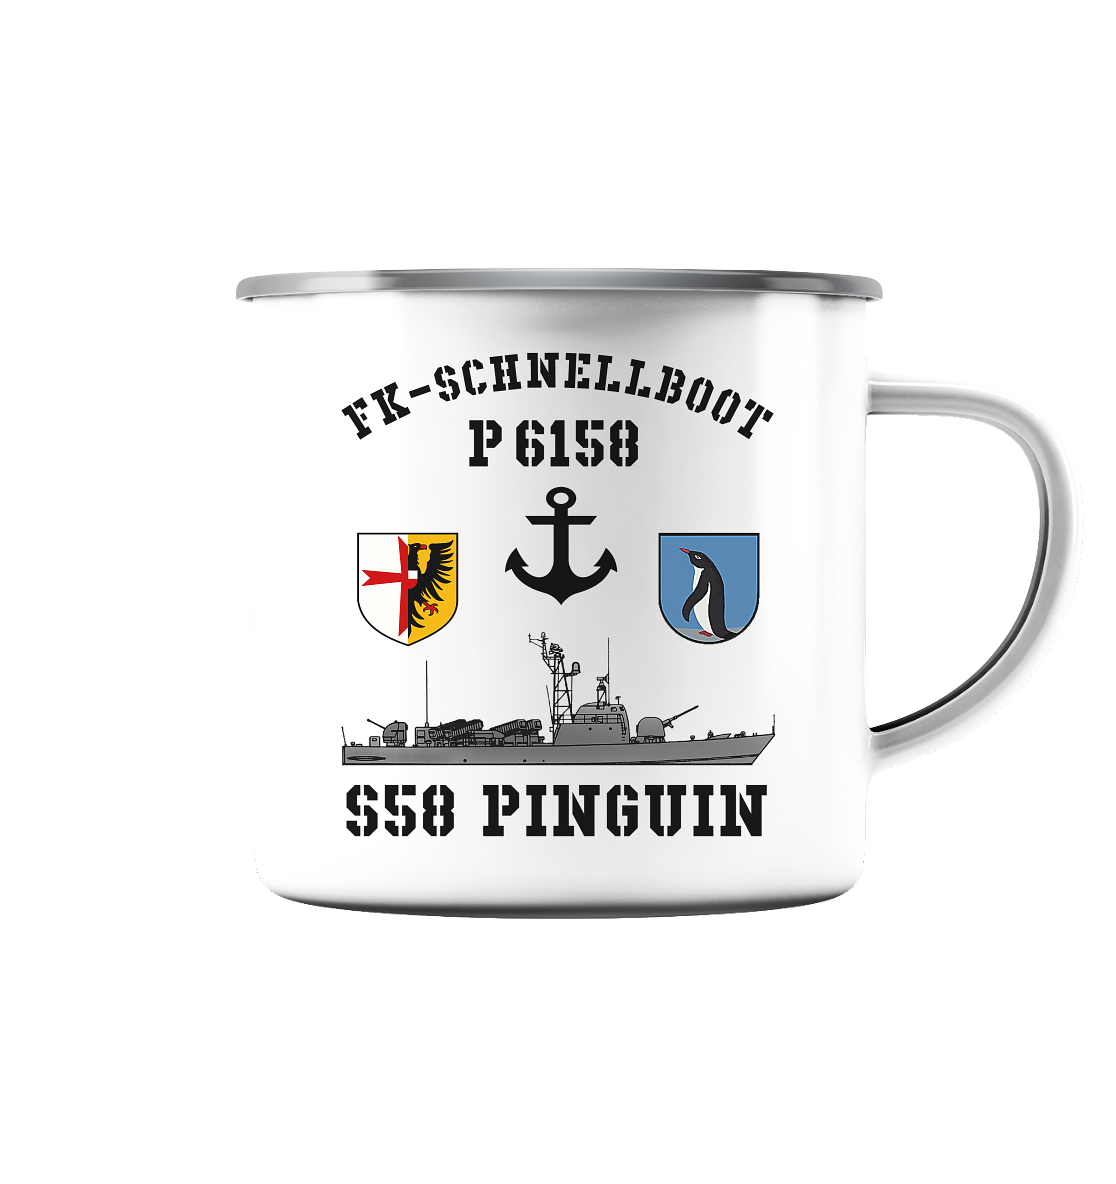 FK-Schnellboot P6158 PINGUIN Anker - Emaille Tasse (Silber)